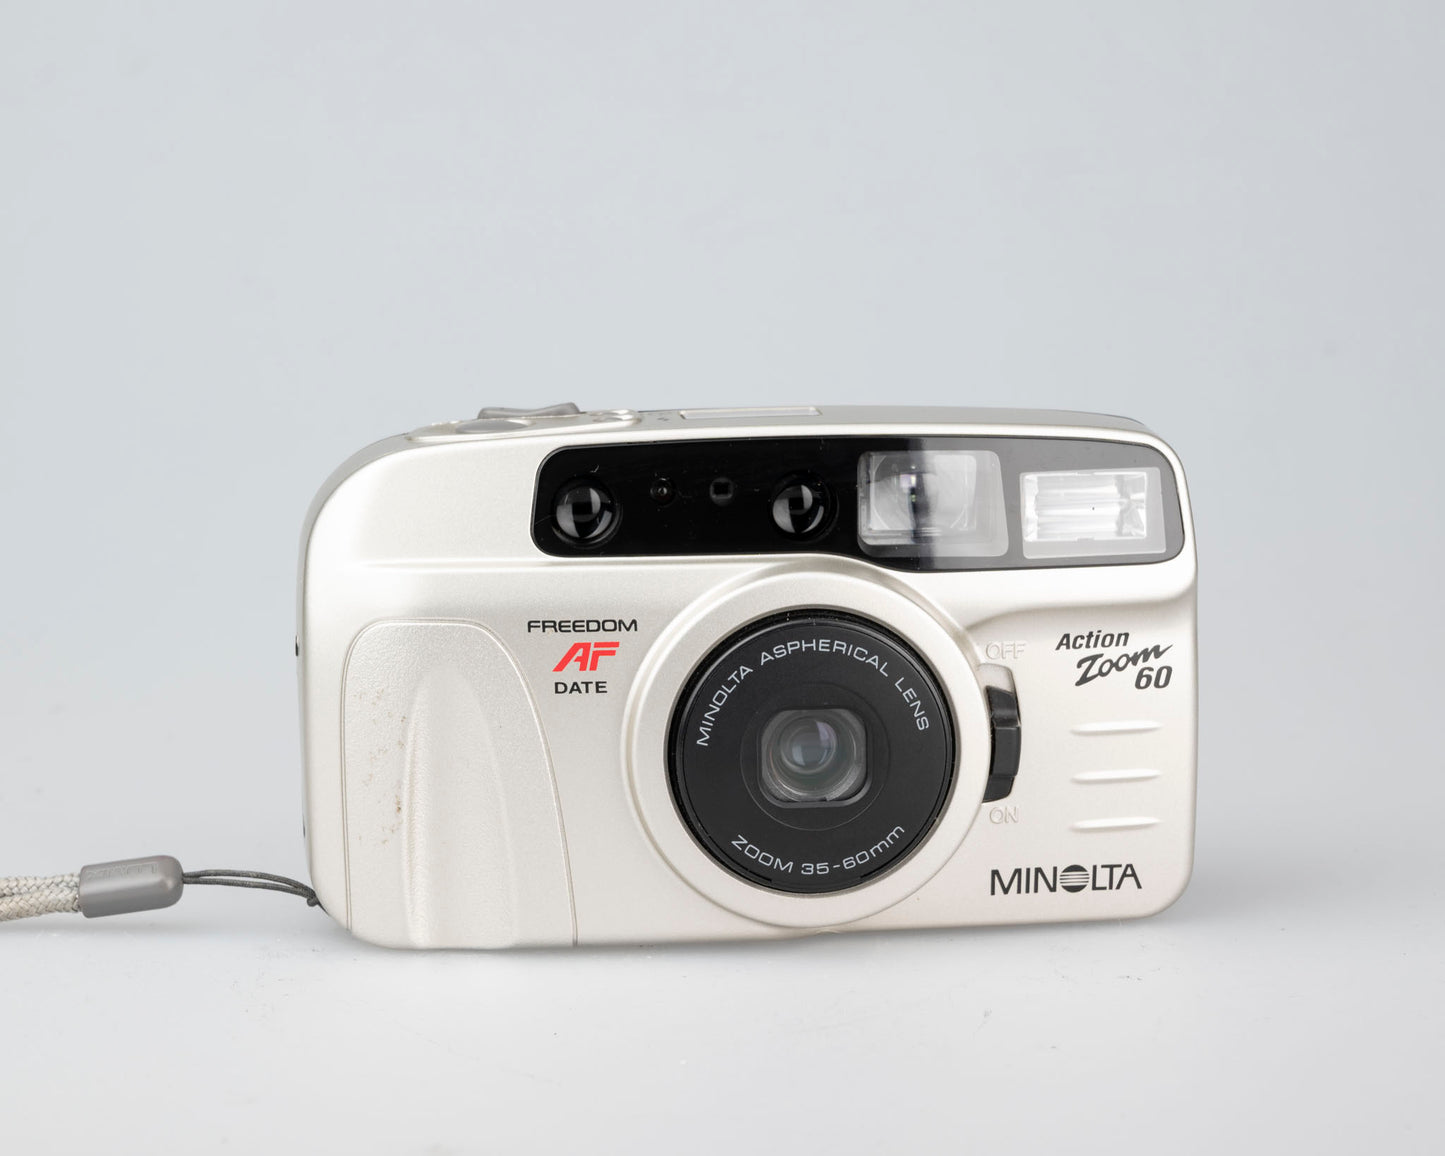 Minolta Freedom Action Zoom 60 35mm camera (serial 38333695)